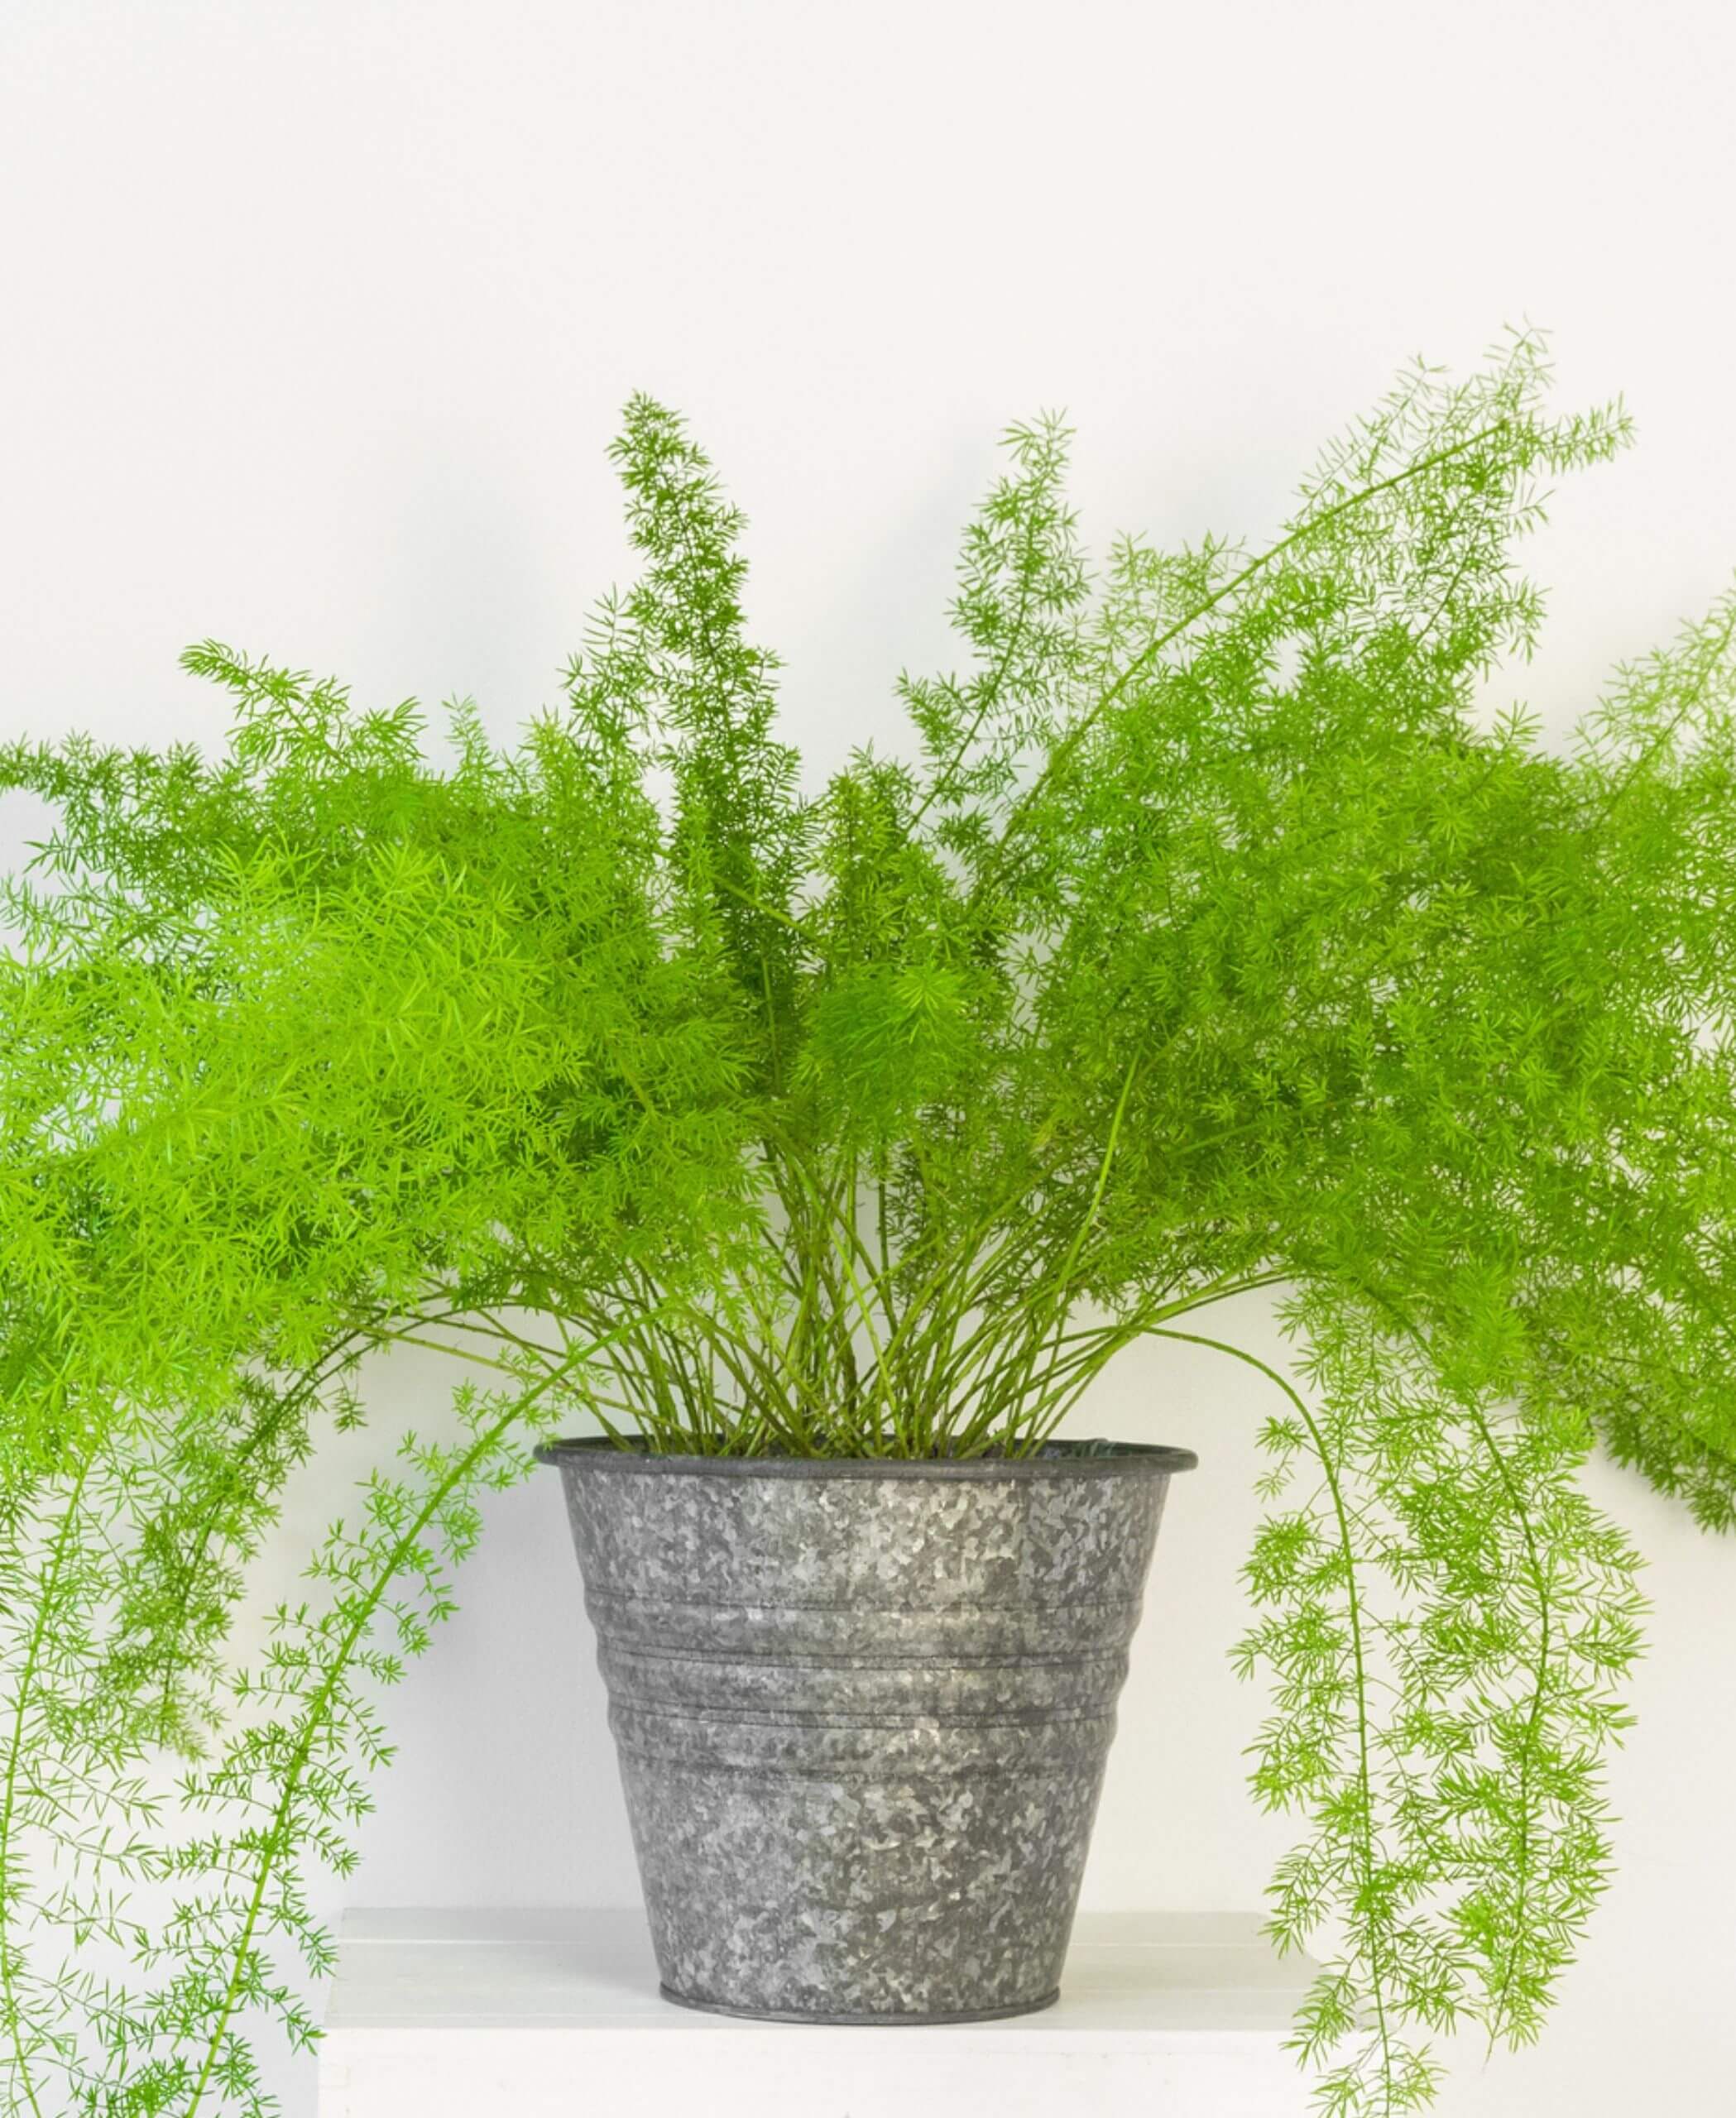 Asparagus Fern Care: Growing Asparagus Ferns